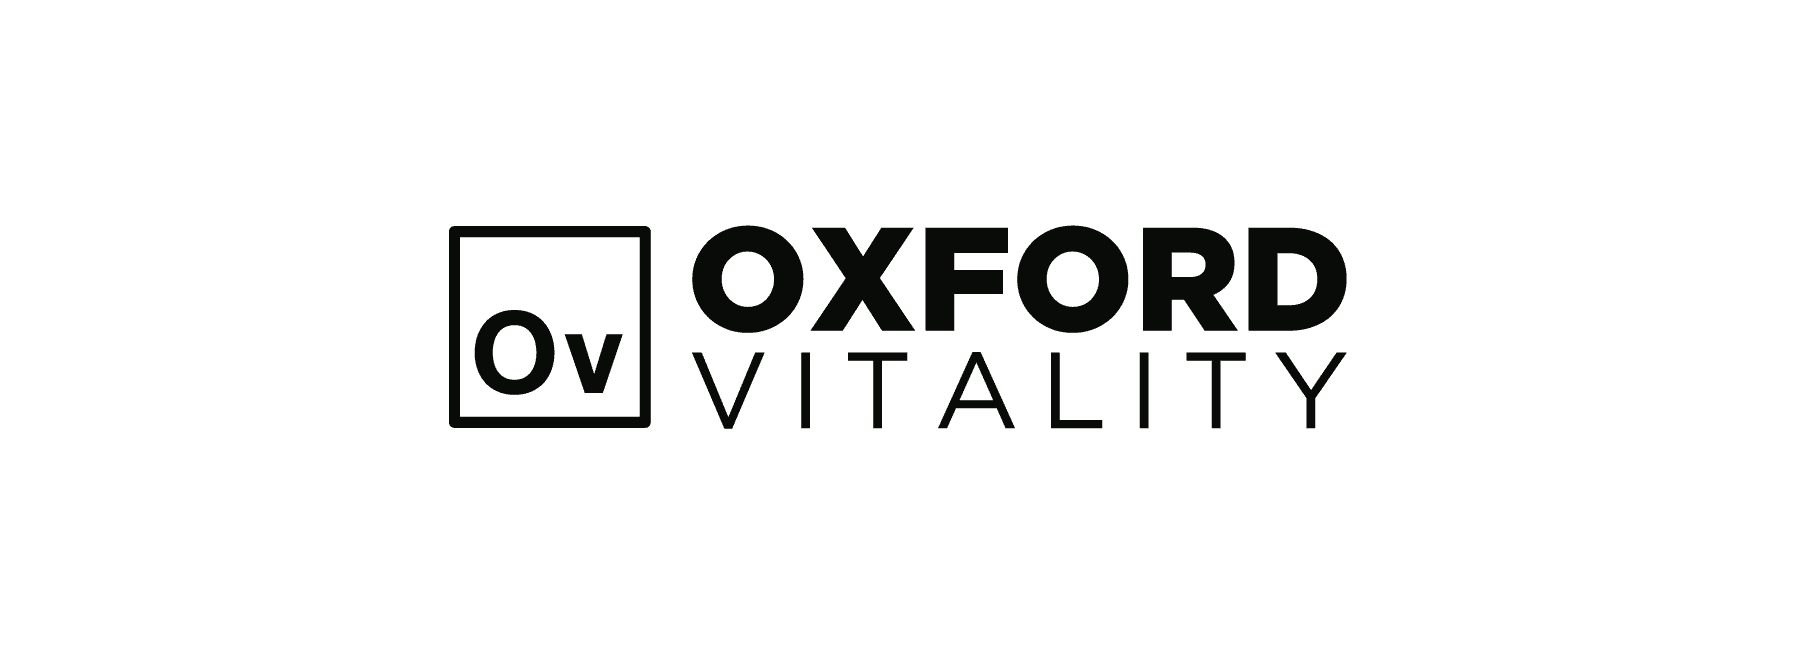 The Oxford Vitality logo